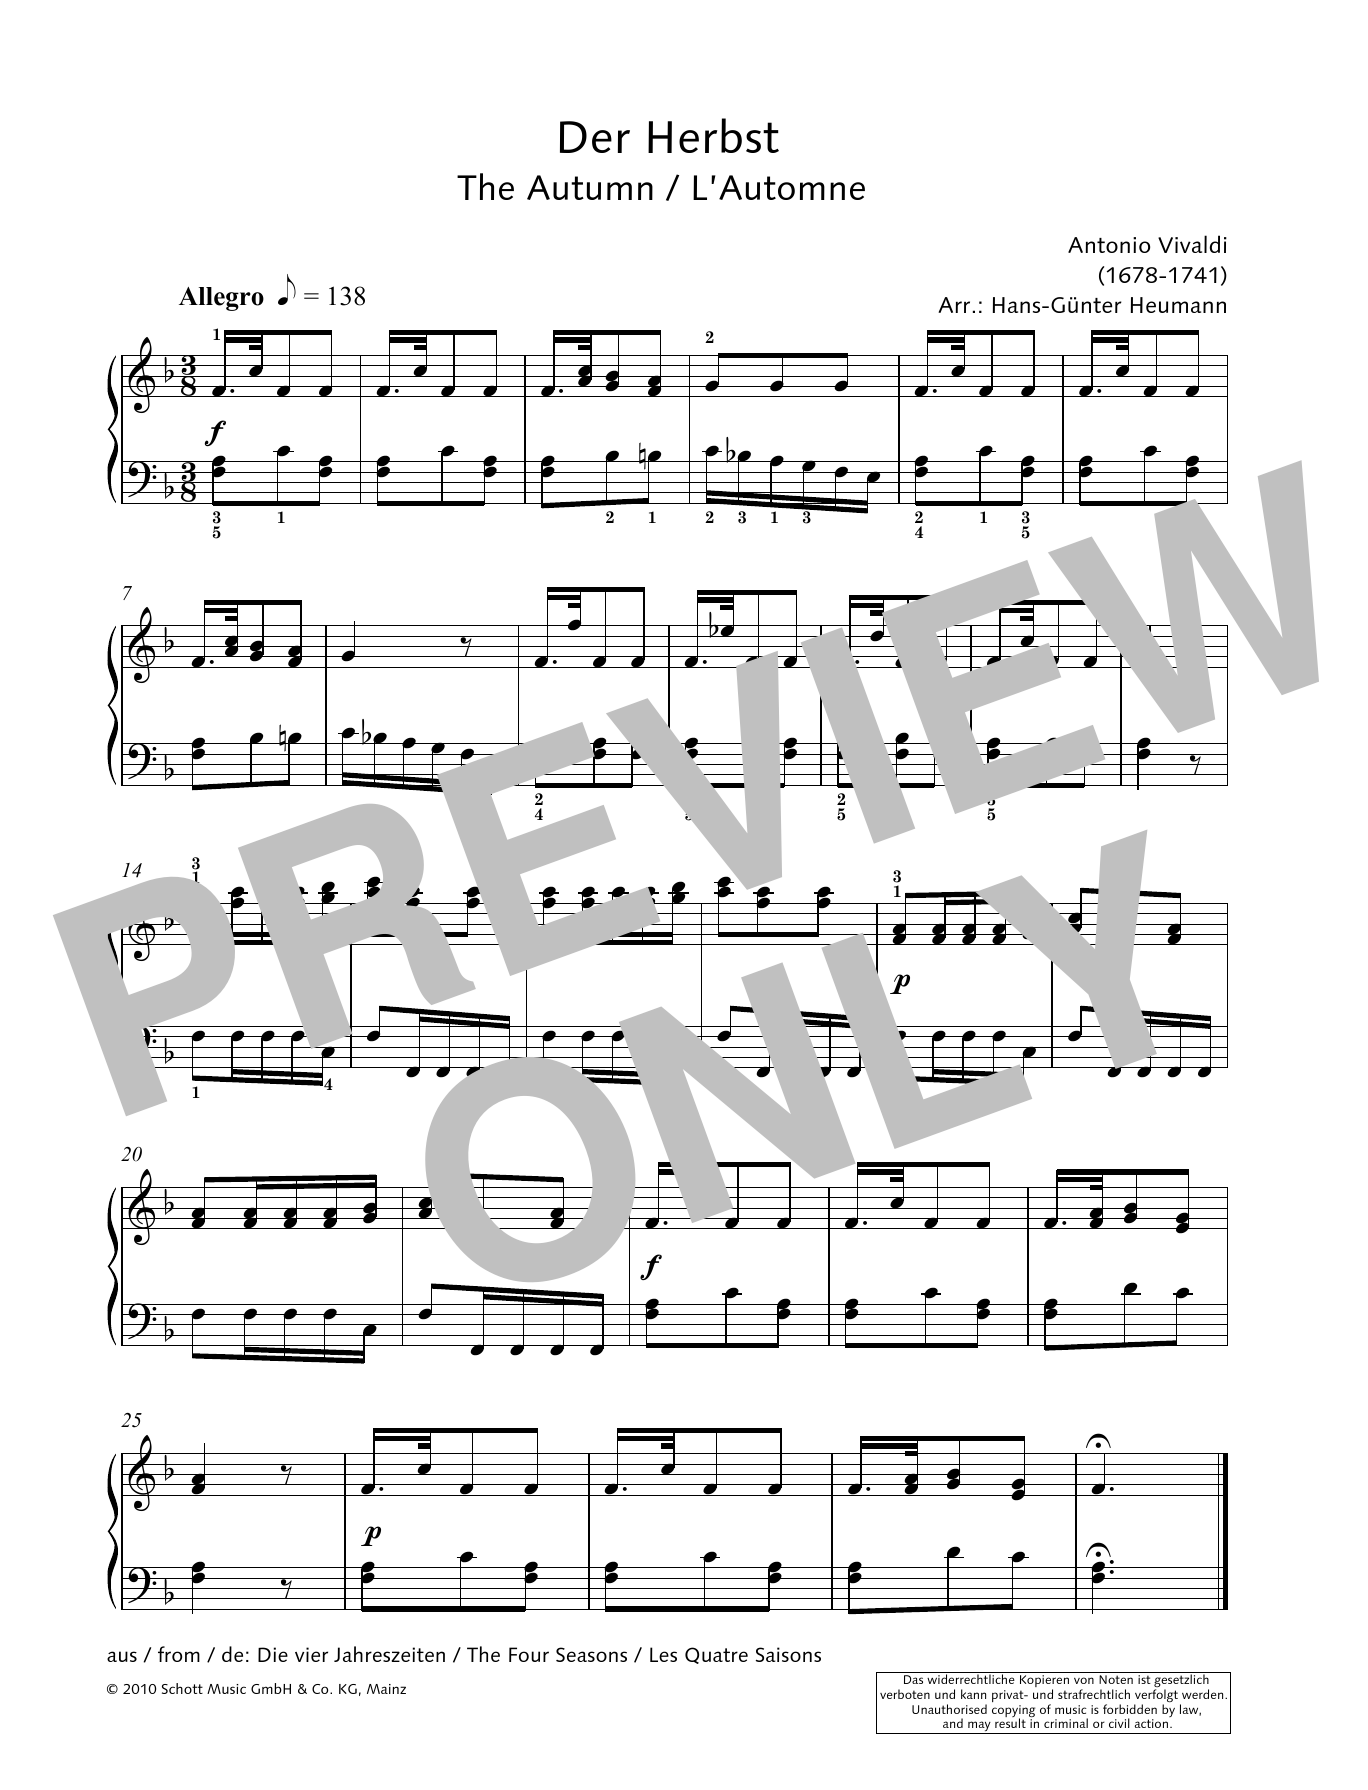 Antonio Vivaldi The Autumn Sheet Music Notes & Chords for Piano Solo - Download or Print PDF